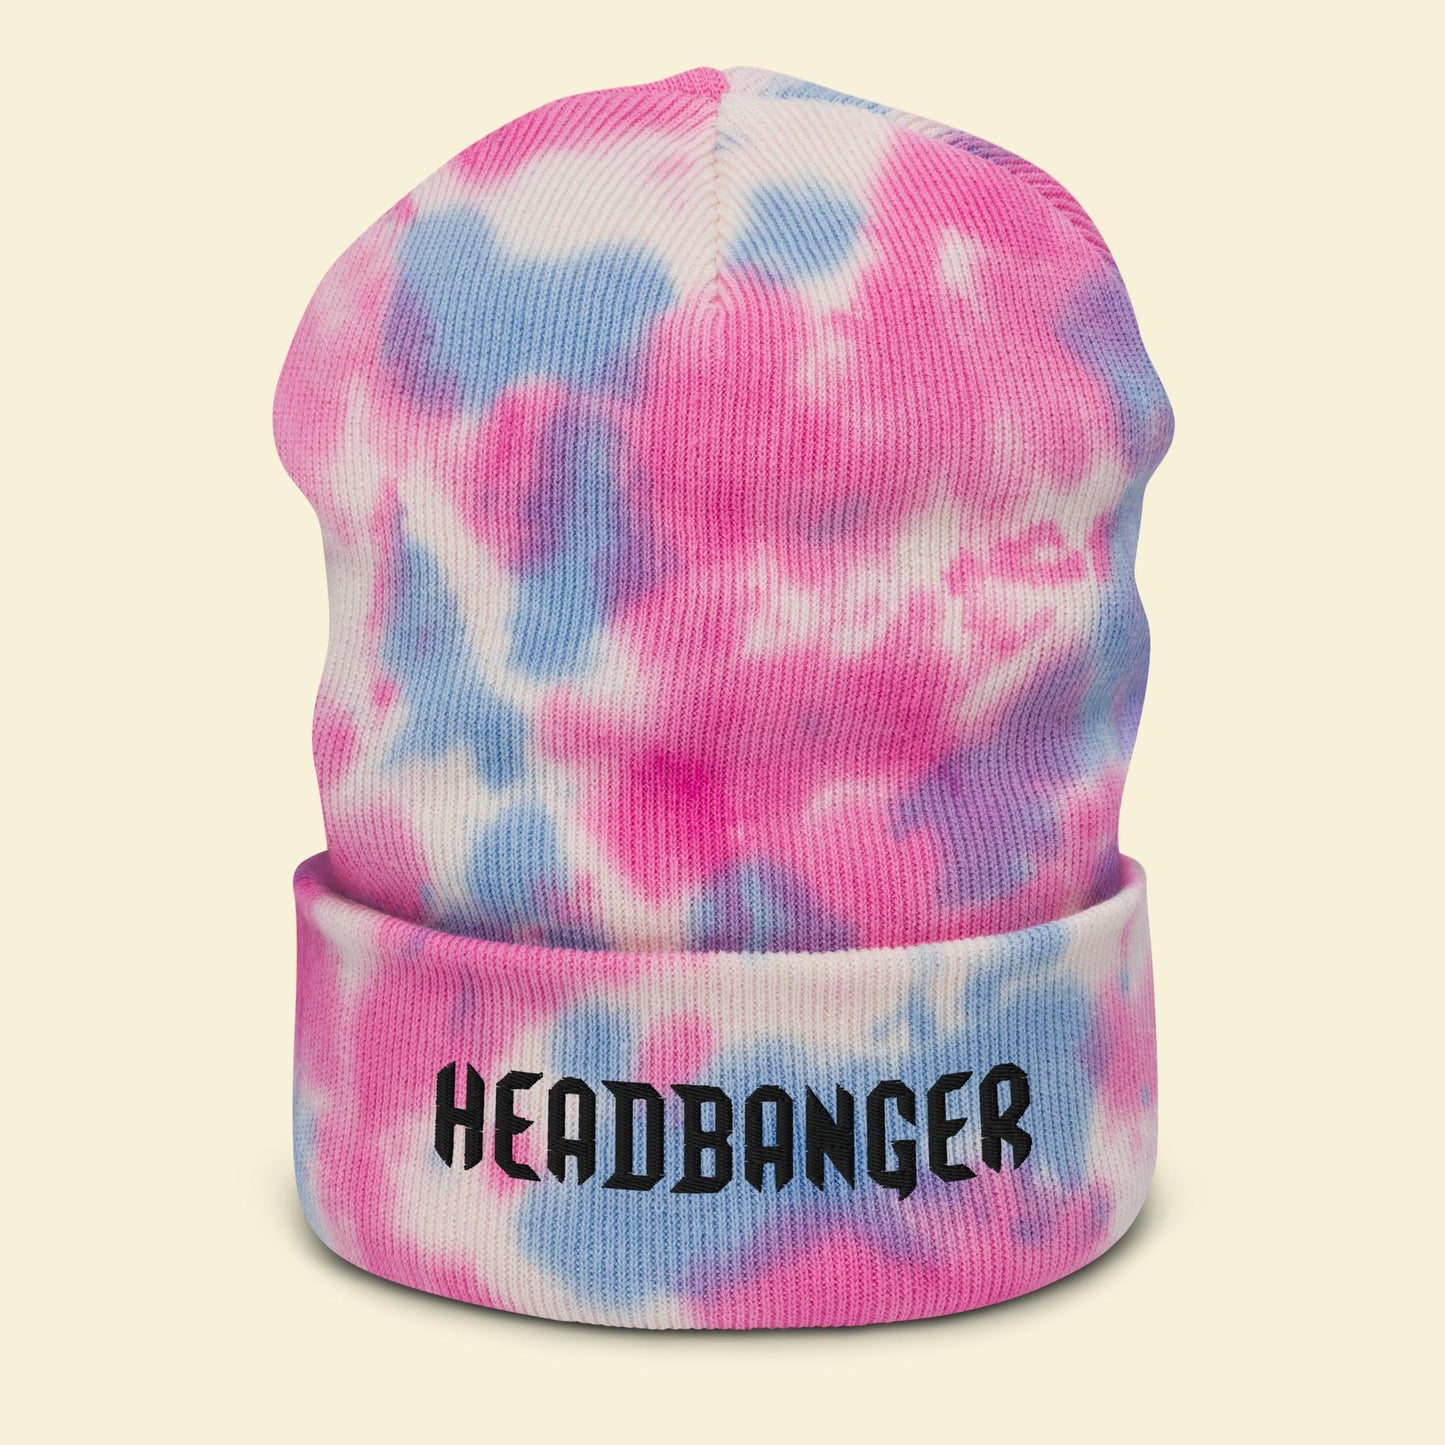 Headbanger Tie-Dye Beanie